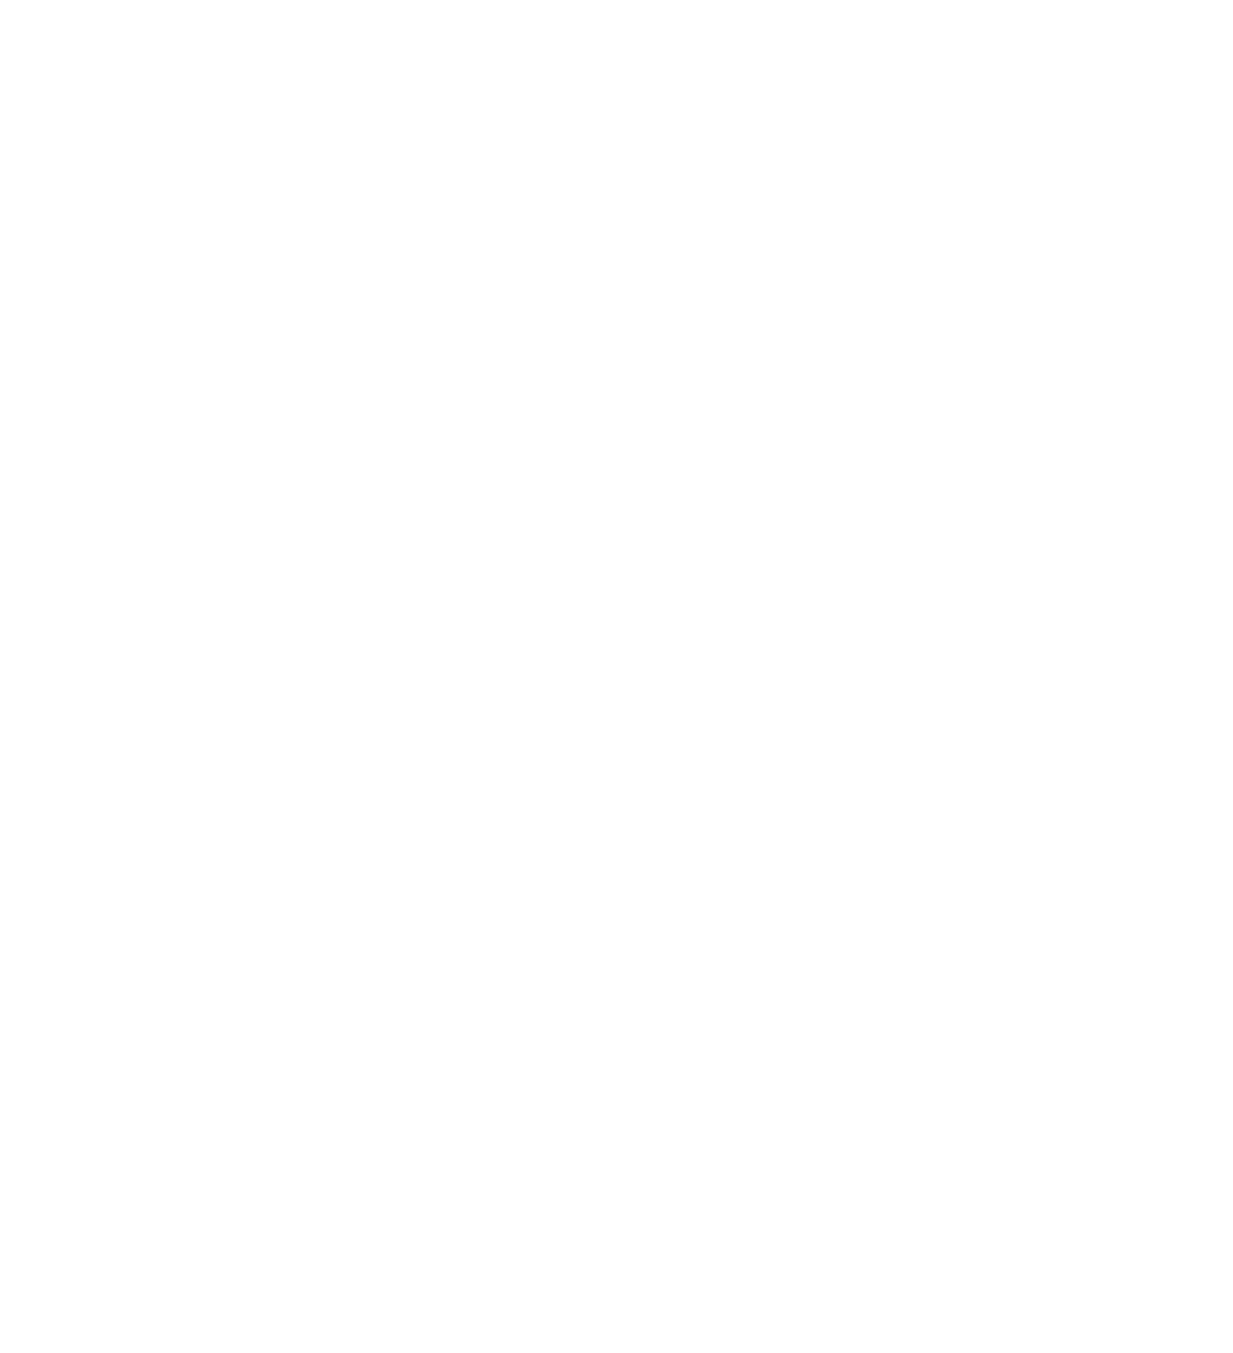 Camping and Caravanning Club Logo